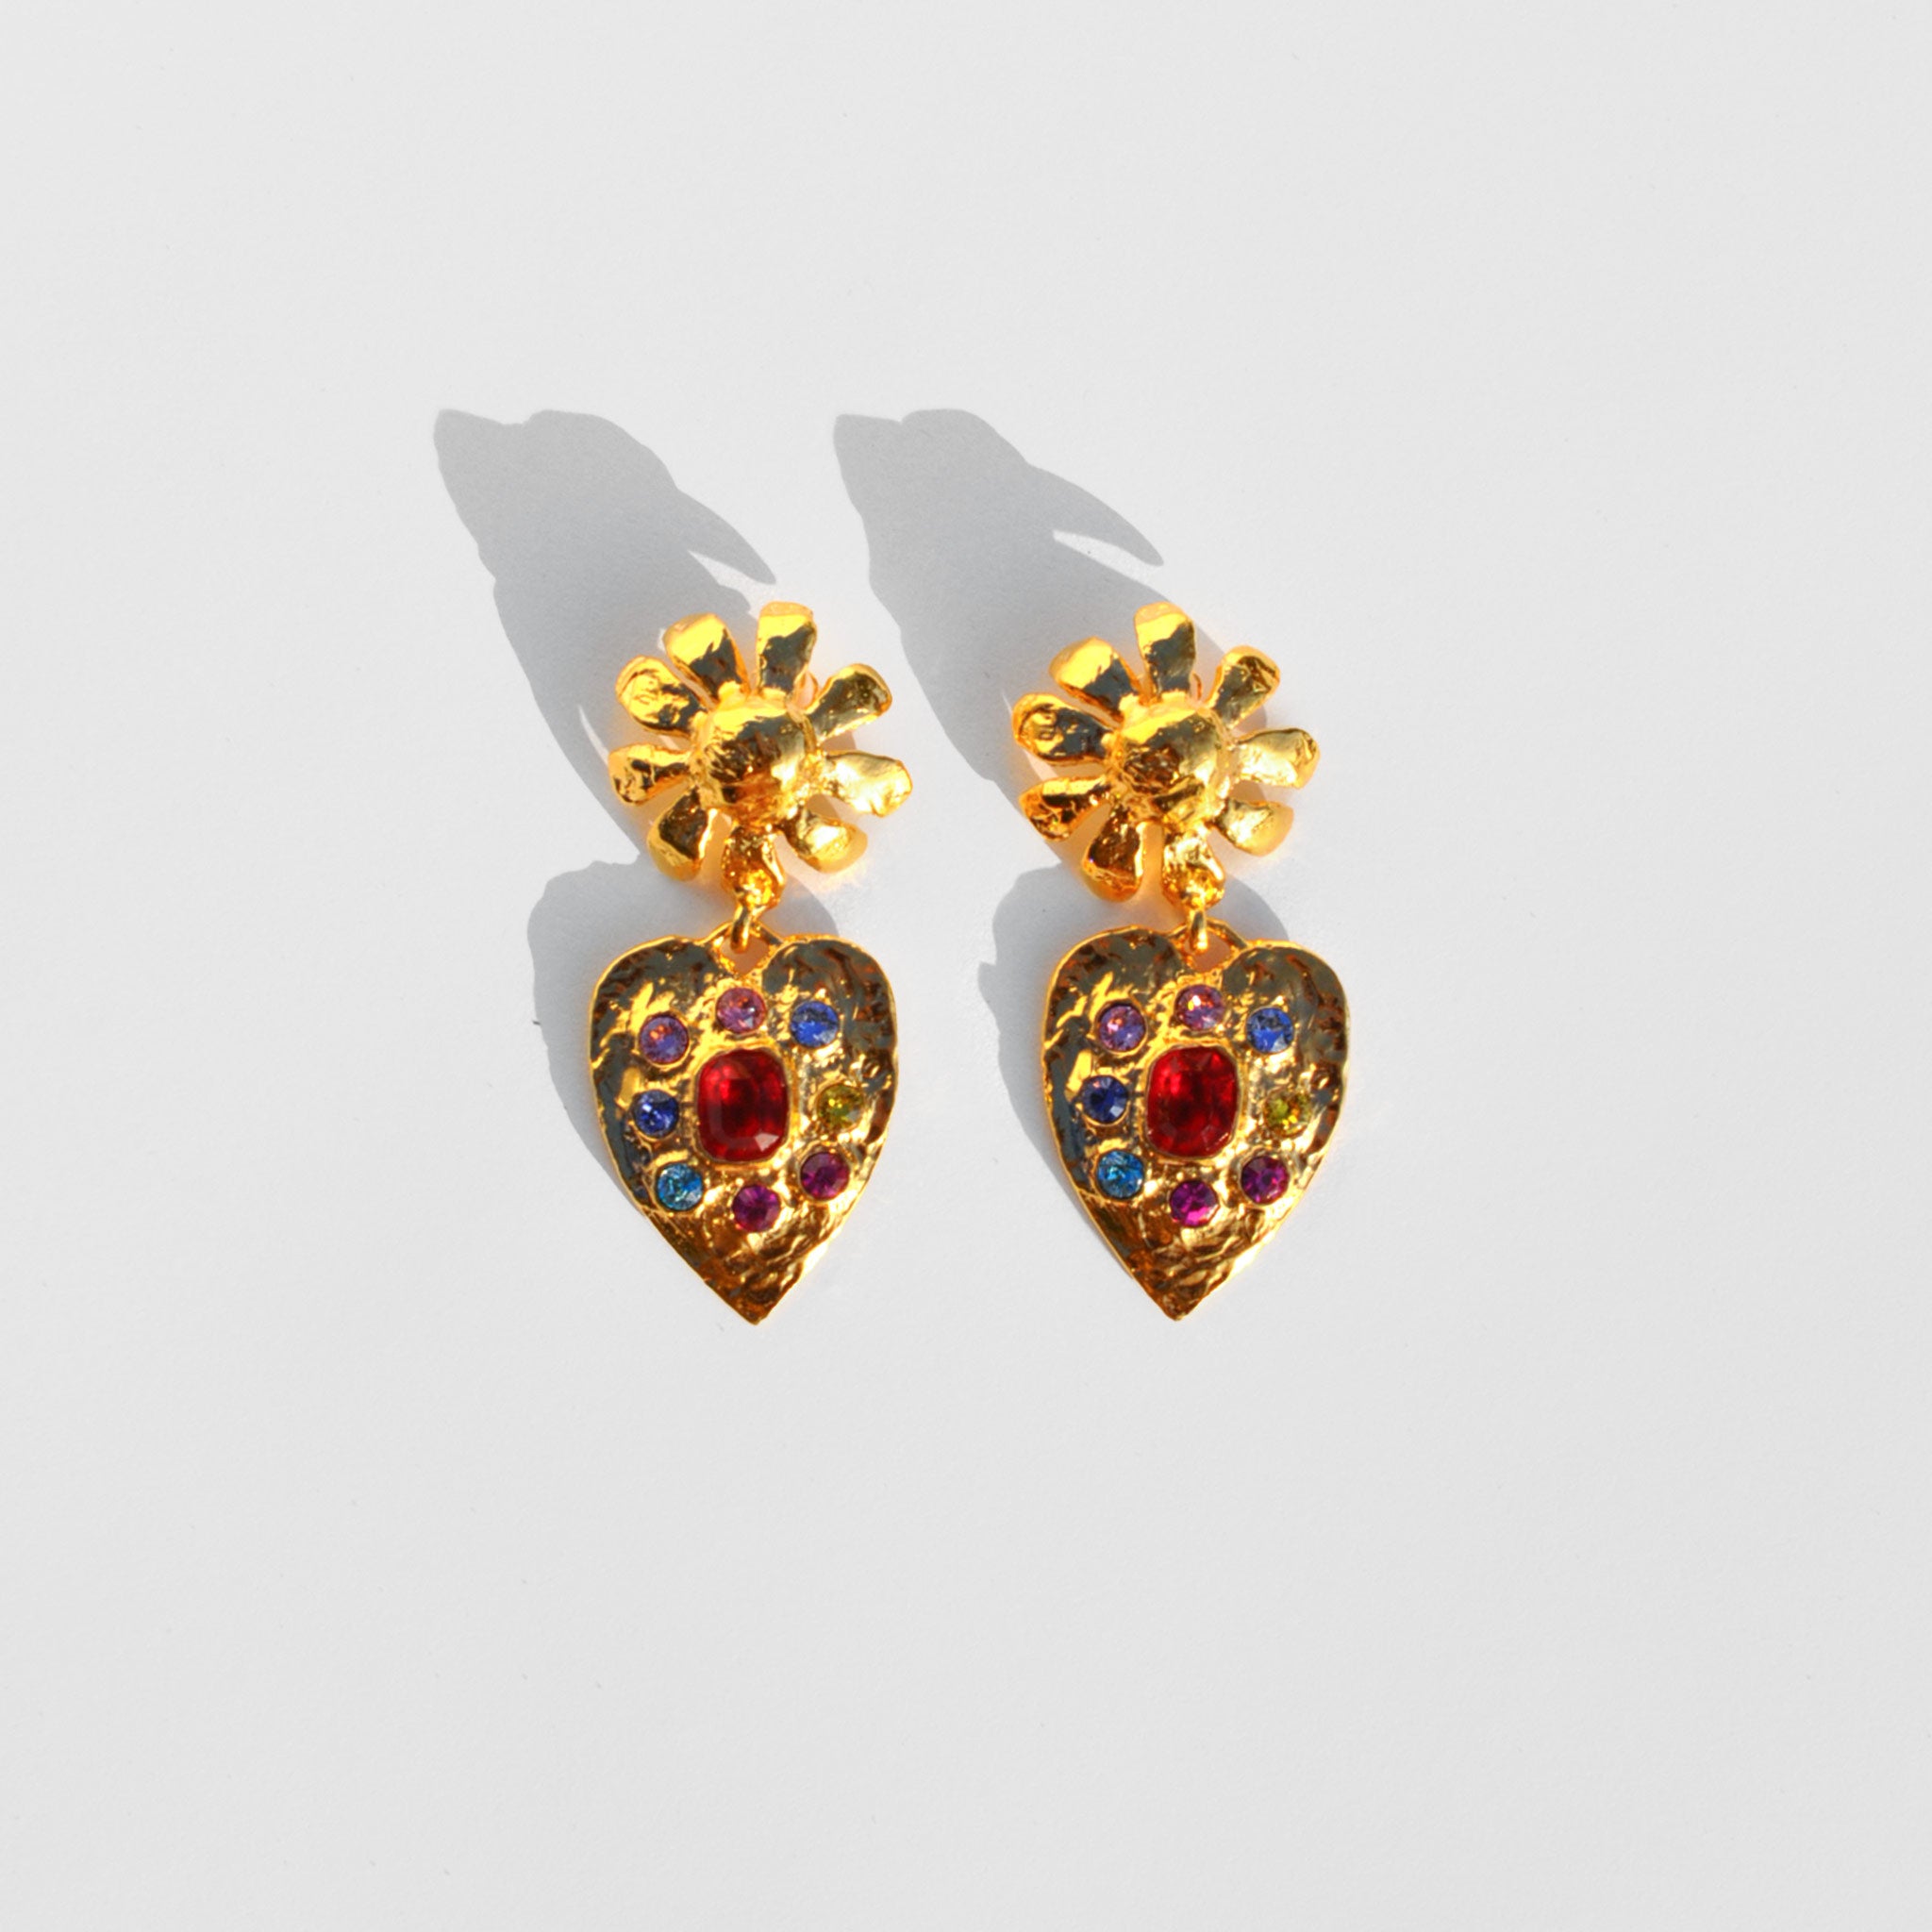 Flat image of the tropicana earrings by Mondo Mondo.